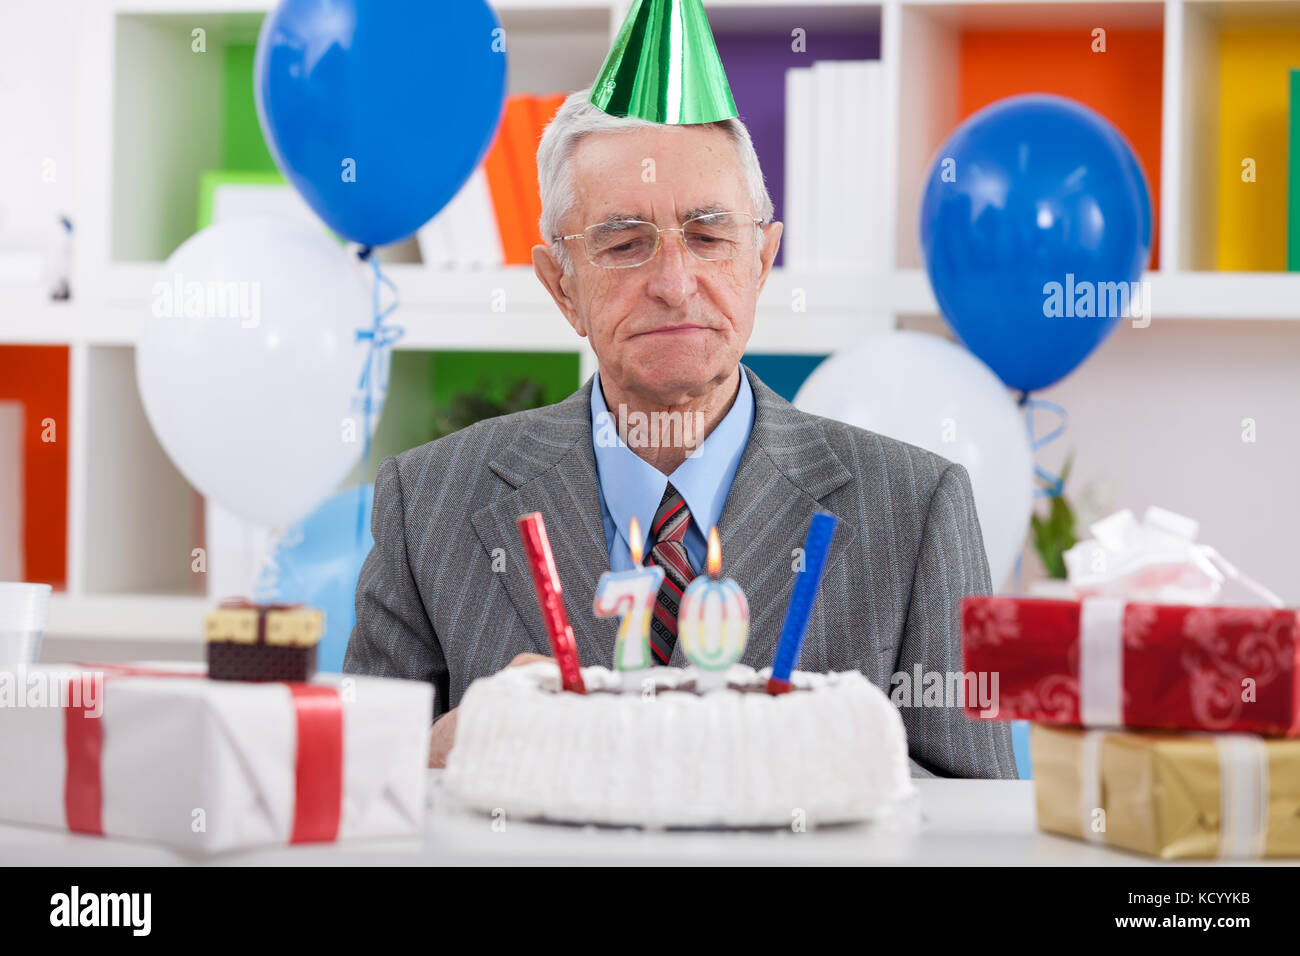 Senior man looking at his birthday cake for 70th birthday Stock Photo